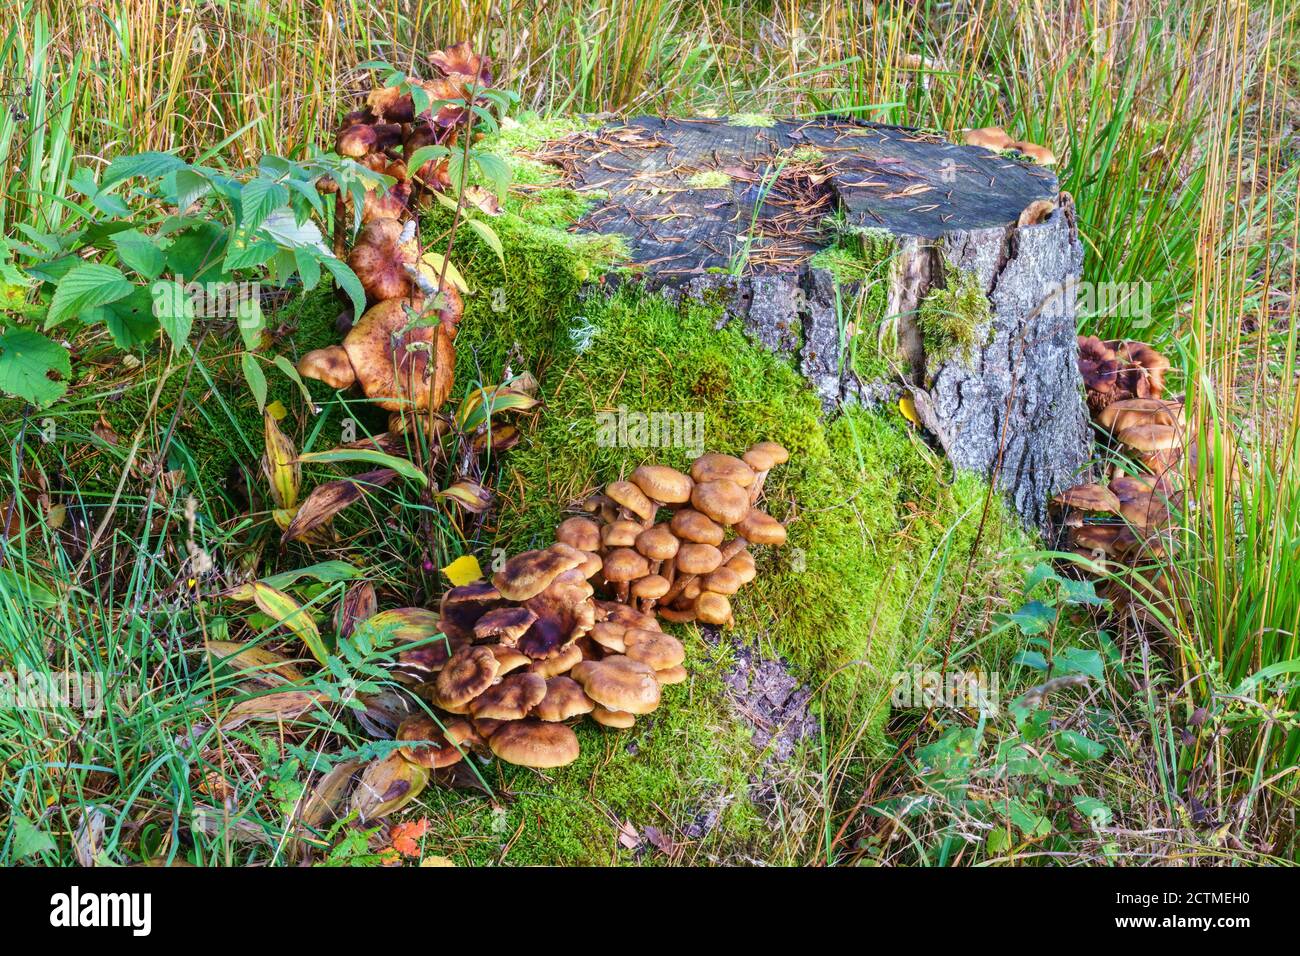 Growing mushrooms on a tree stump Stock Photo